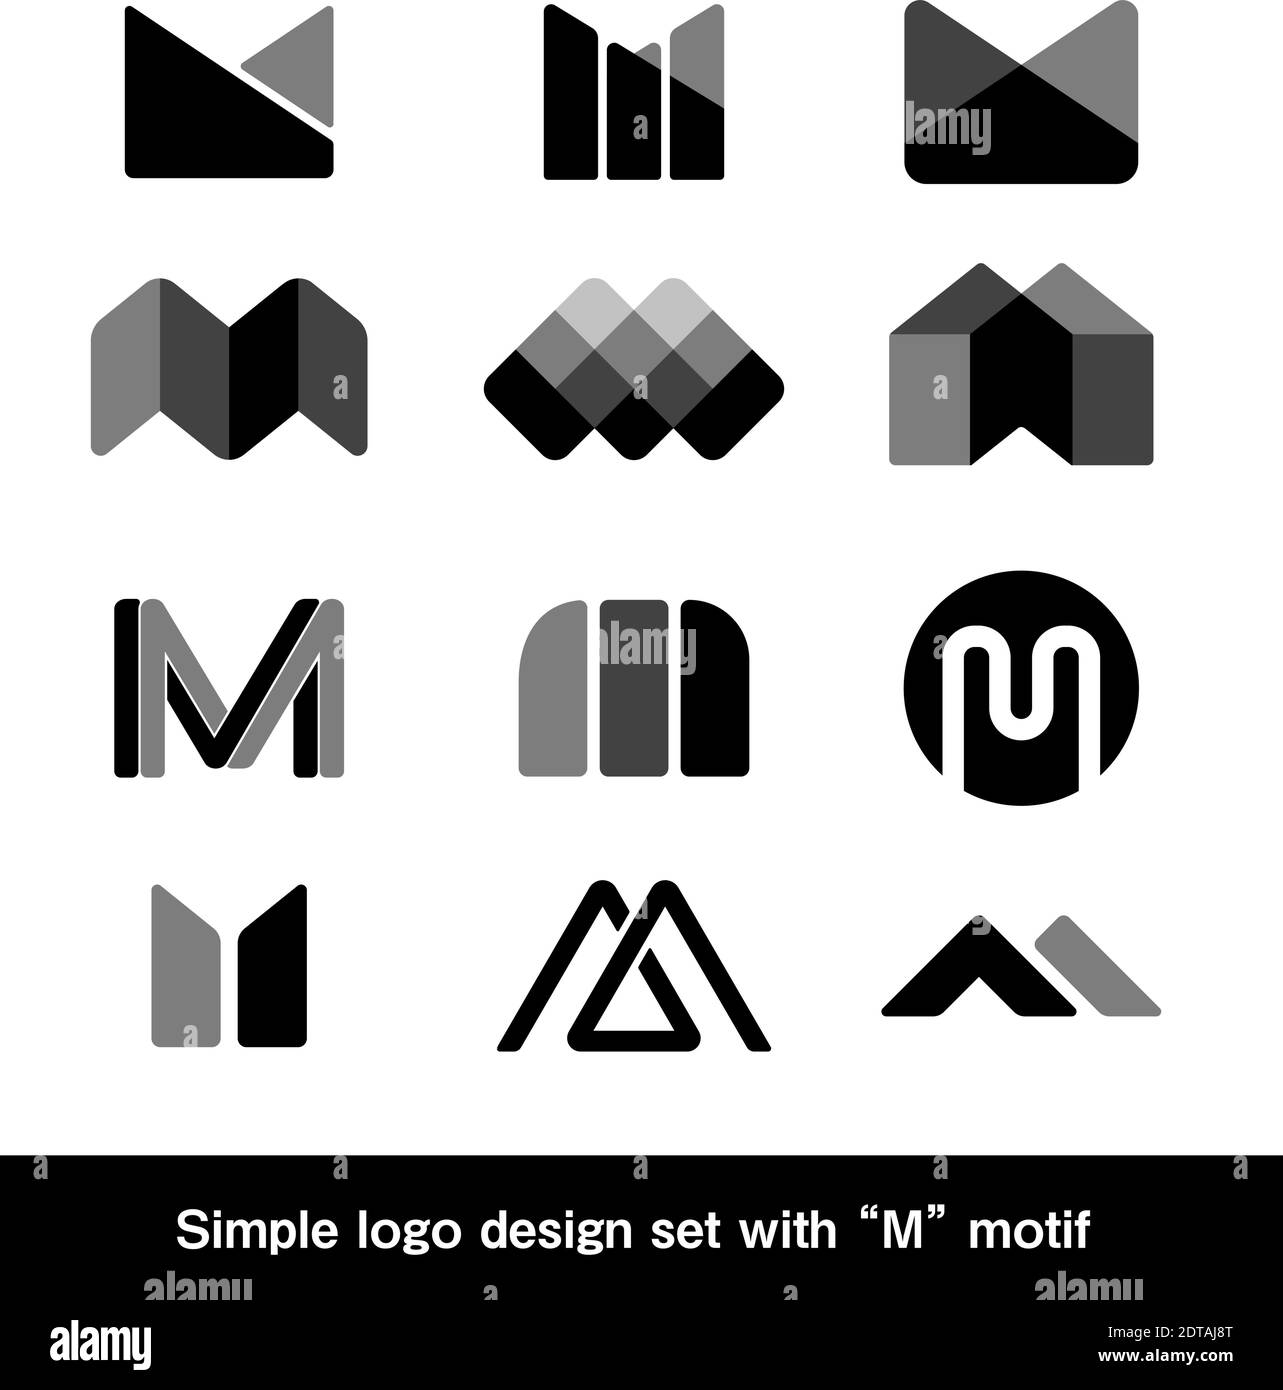 Simple logo design set with 'M' motif. Vector illustration. Stock Vector